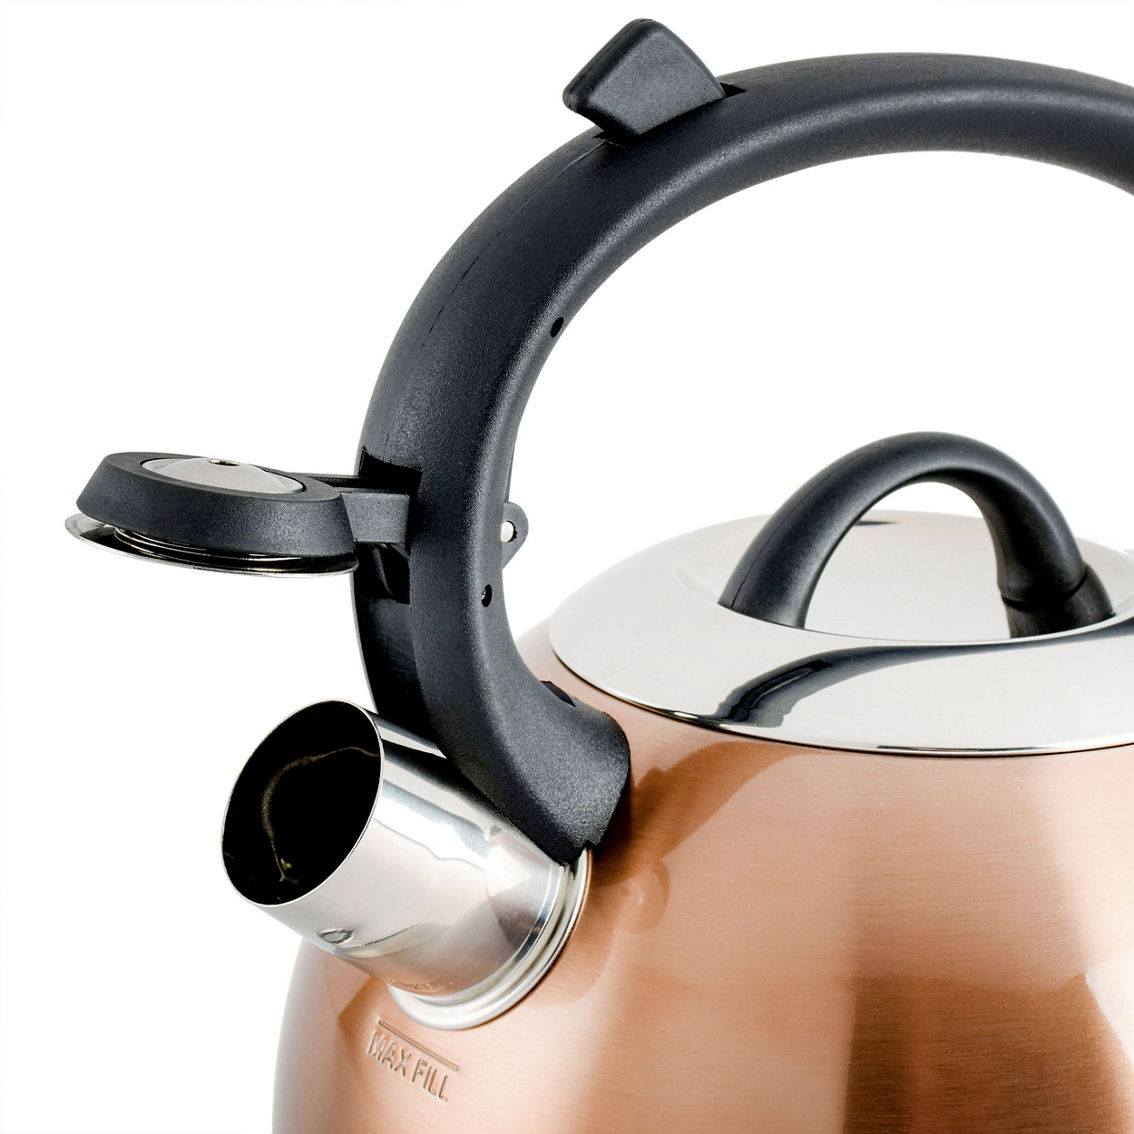 Mr. Coffee Flintshire 1.75 Quart Whistling Stovetop Tea Kettle in Copper - Image 2 of 5